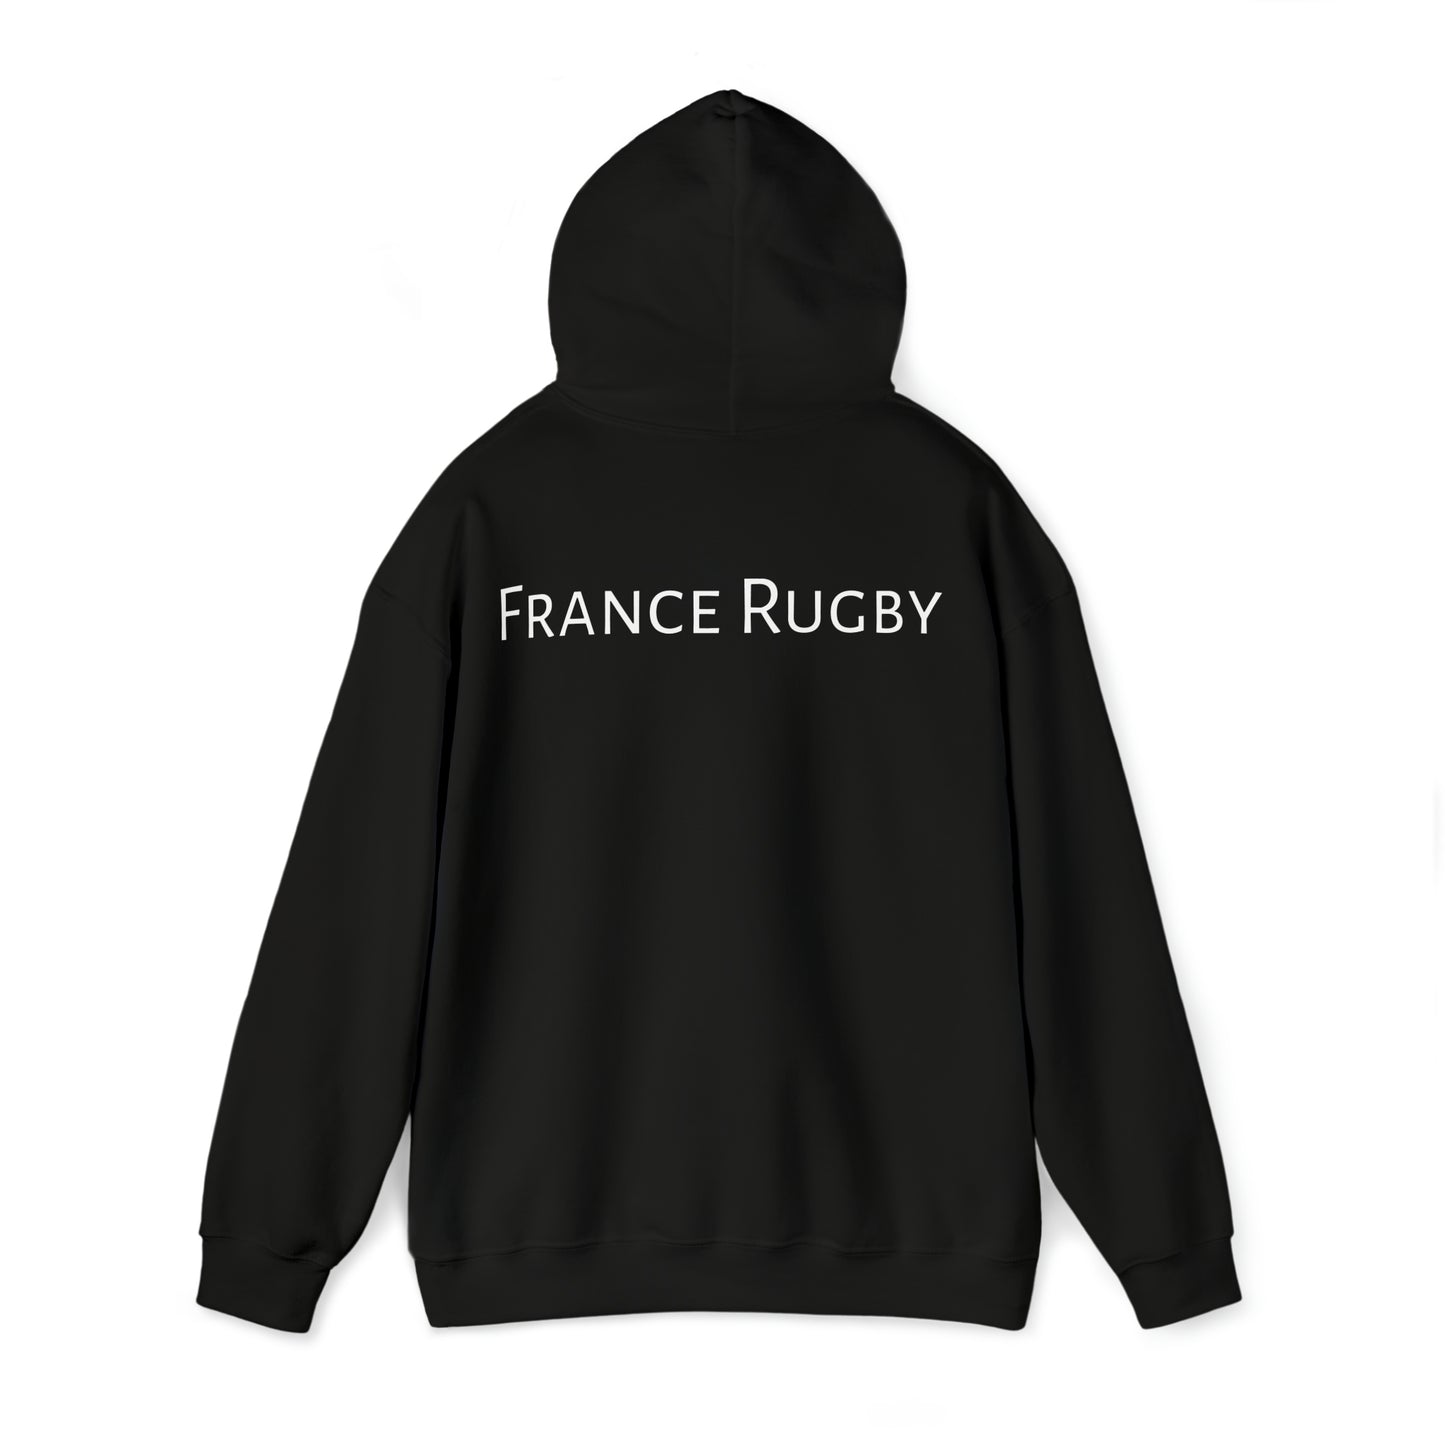 Post Match France - dark hoodies